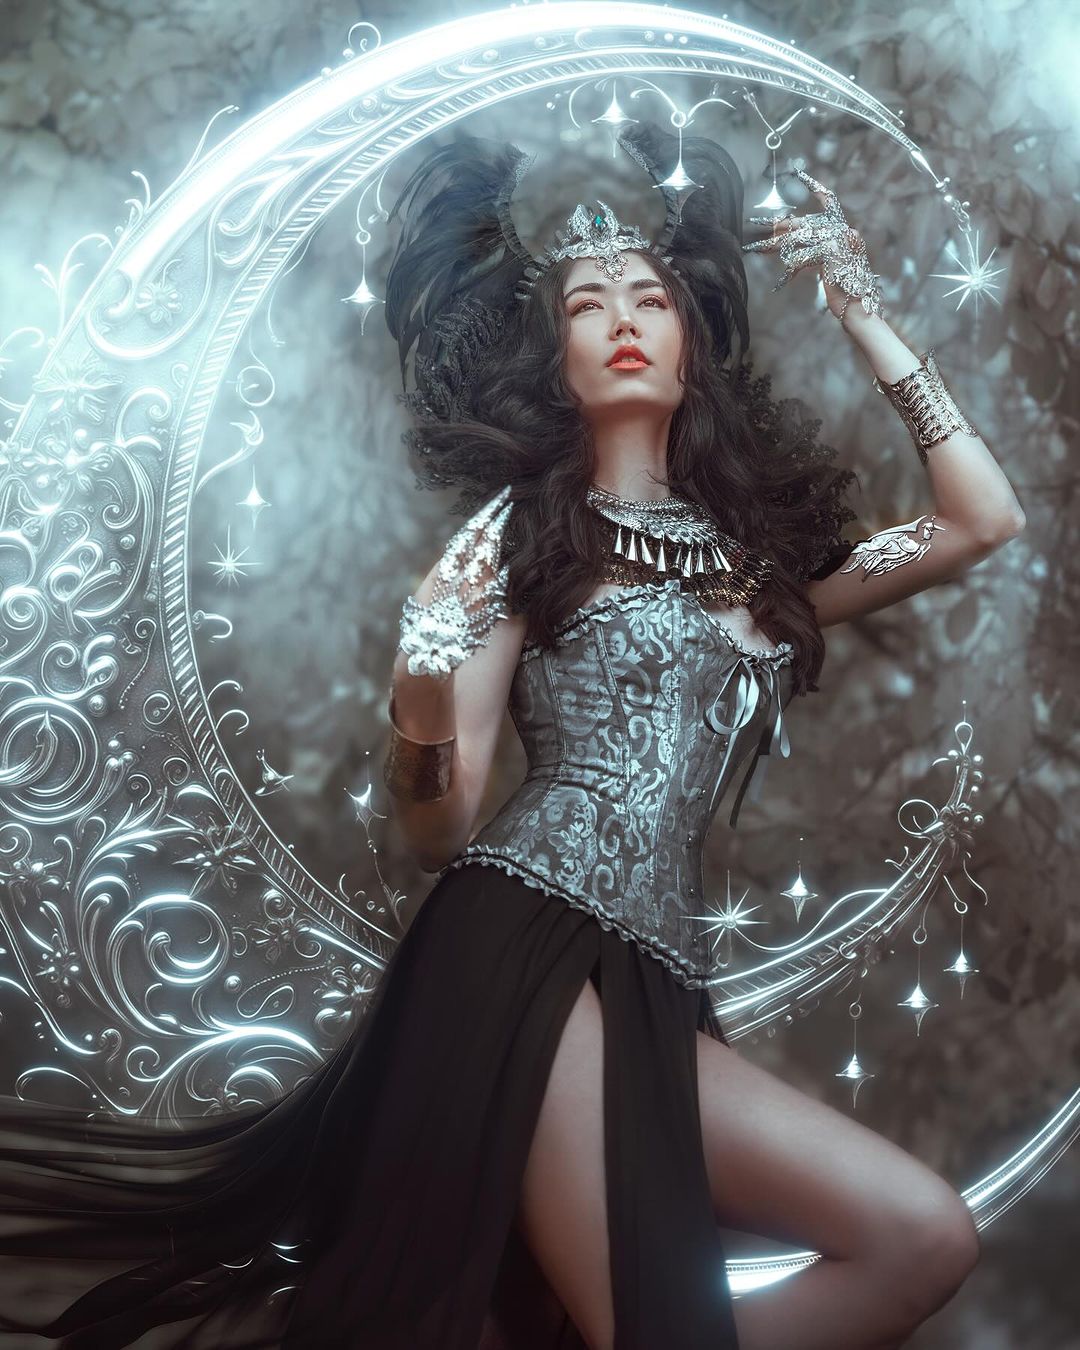 Fairytale fantasy portrait of a woman against a crescent moon